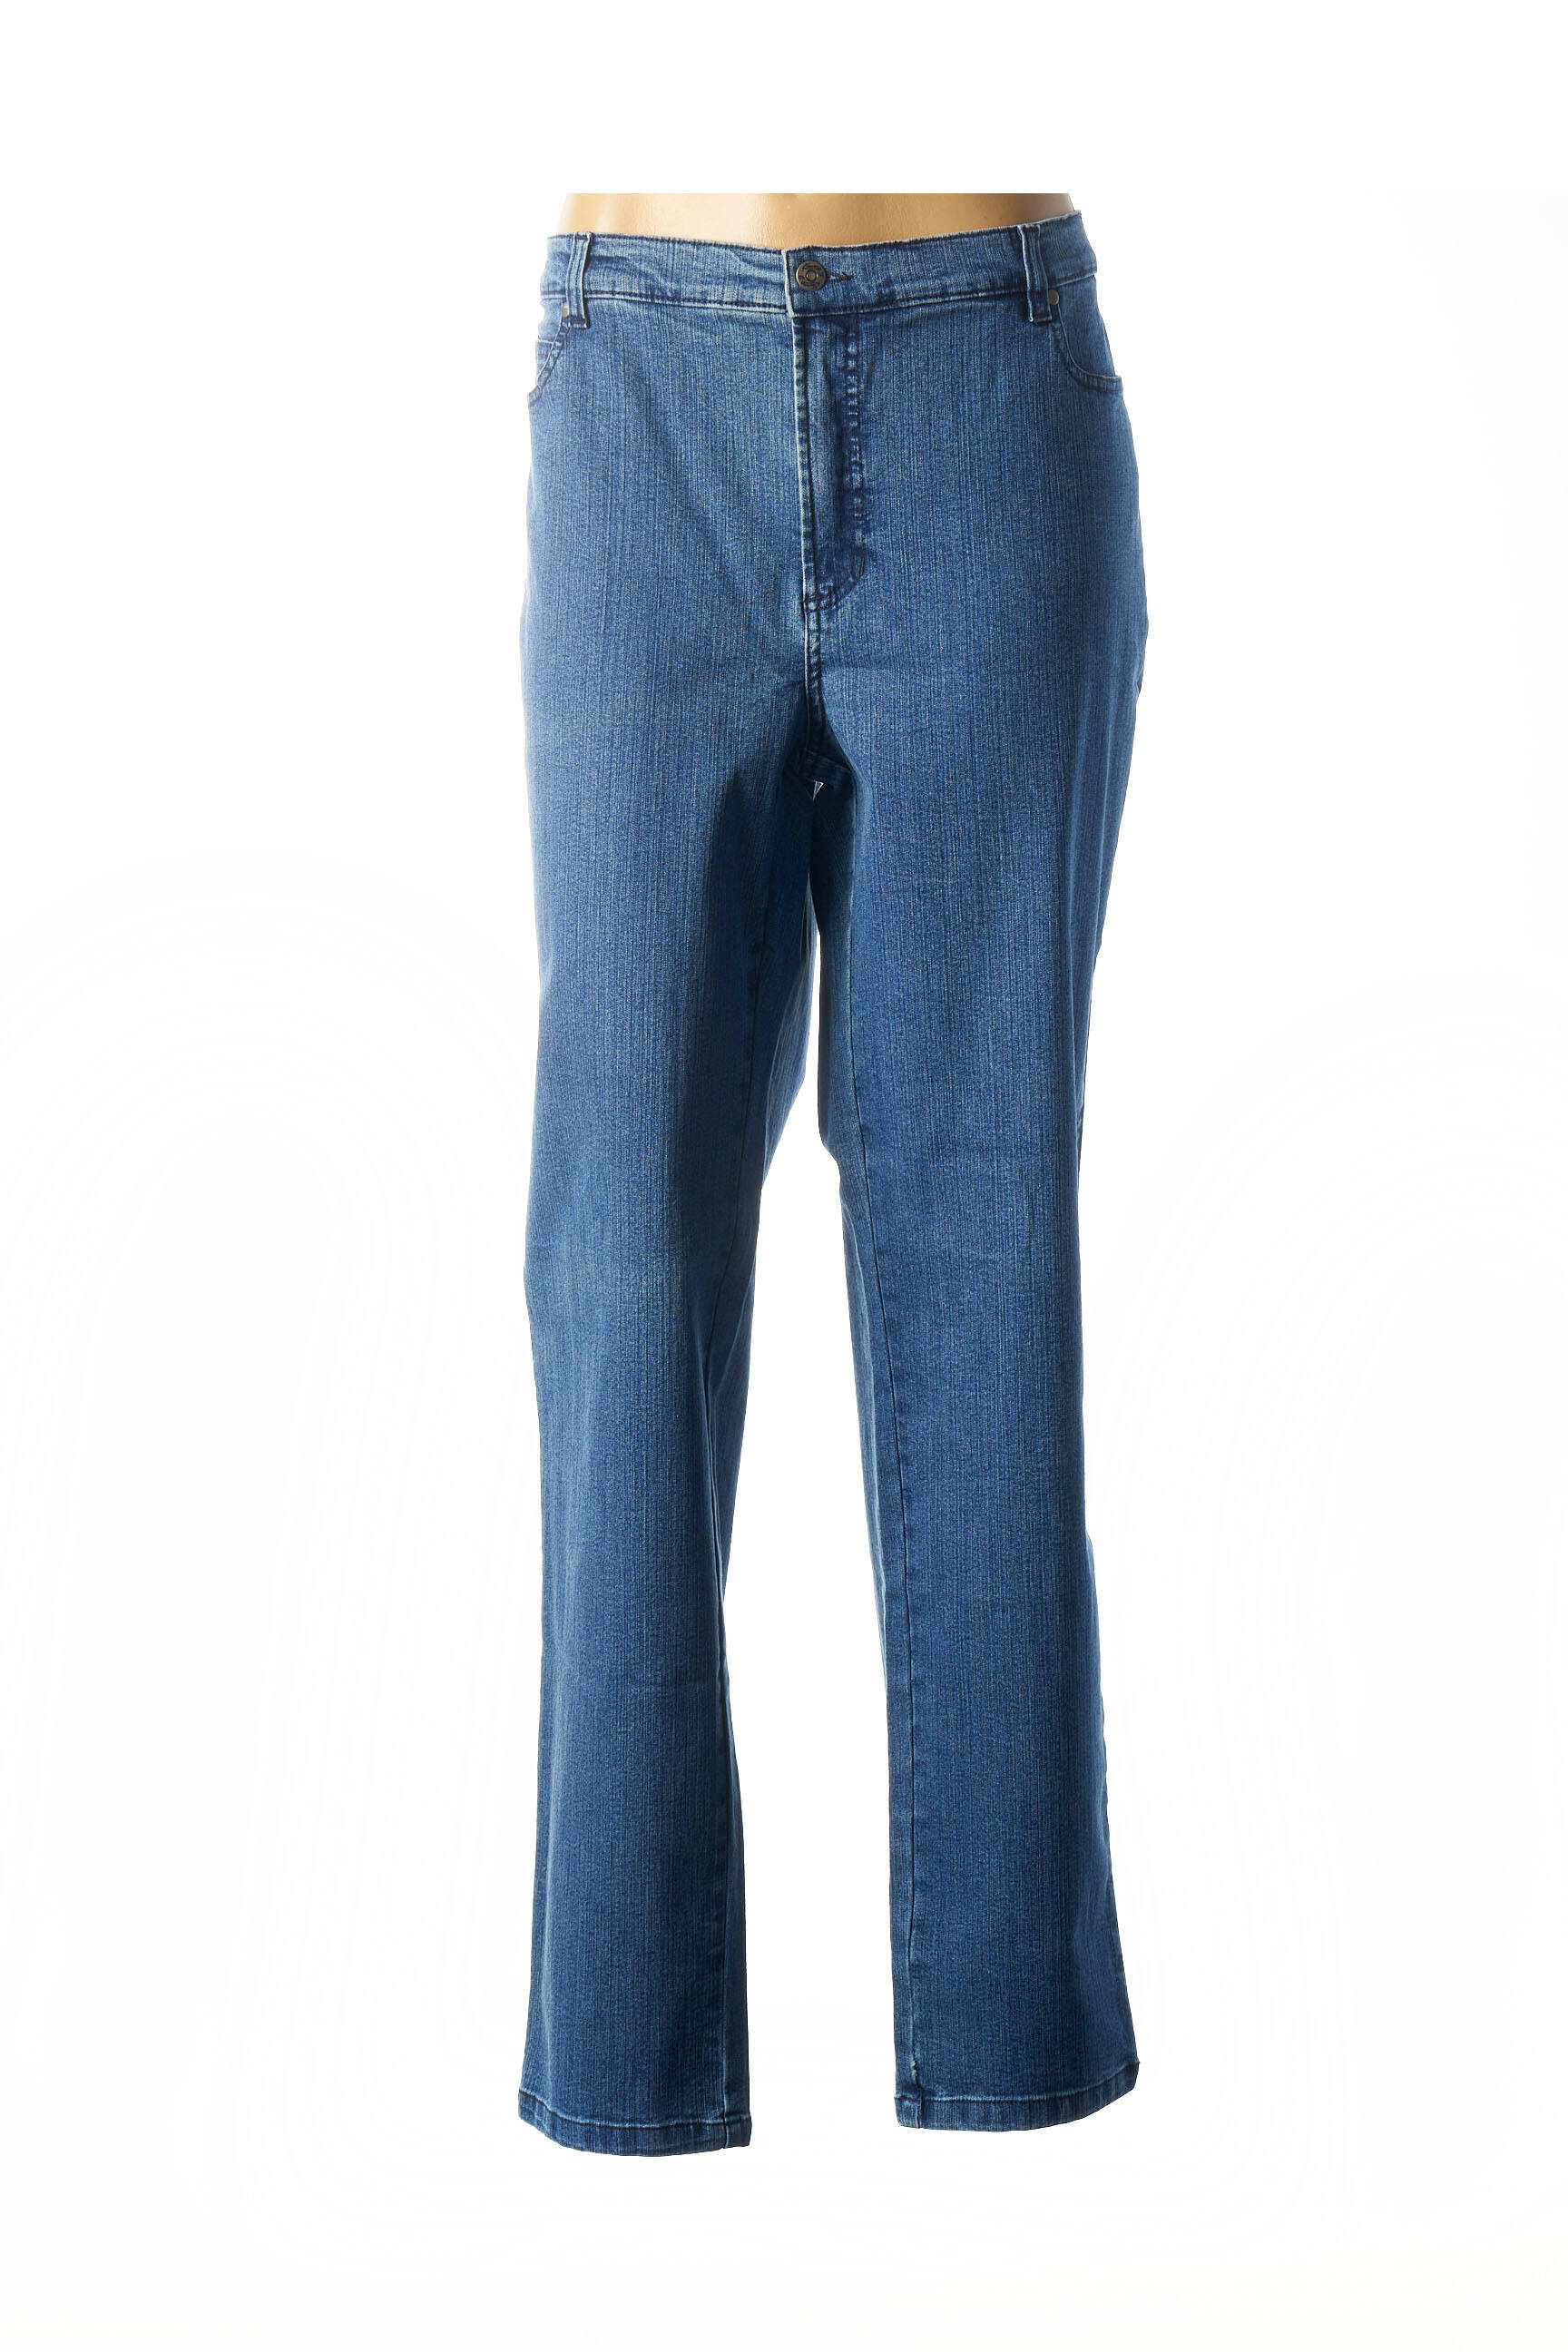 simplyU Jeans coupe-droite bleu motif ray\u00e9 style d\u00e9contract\u00e9 Mode Jeans Jeans coupe-droite 